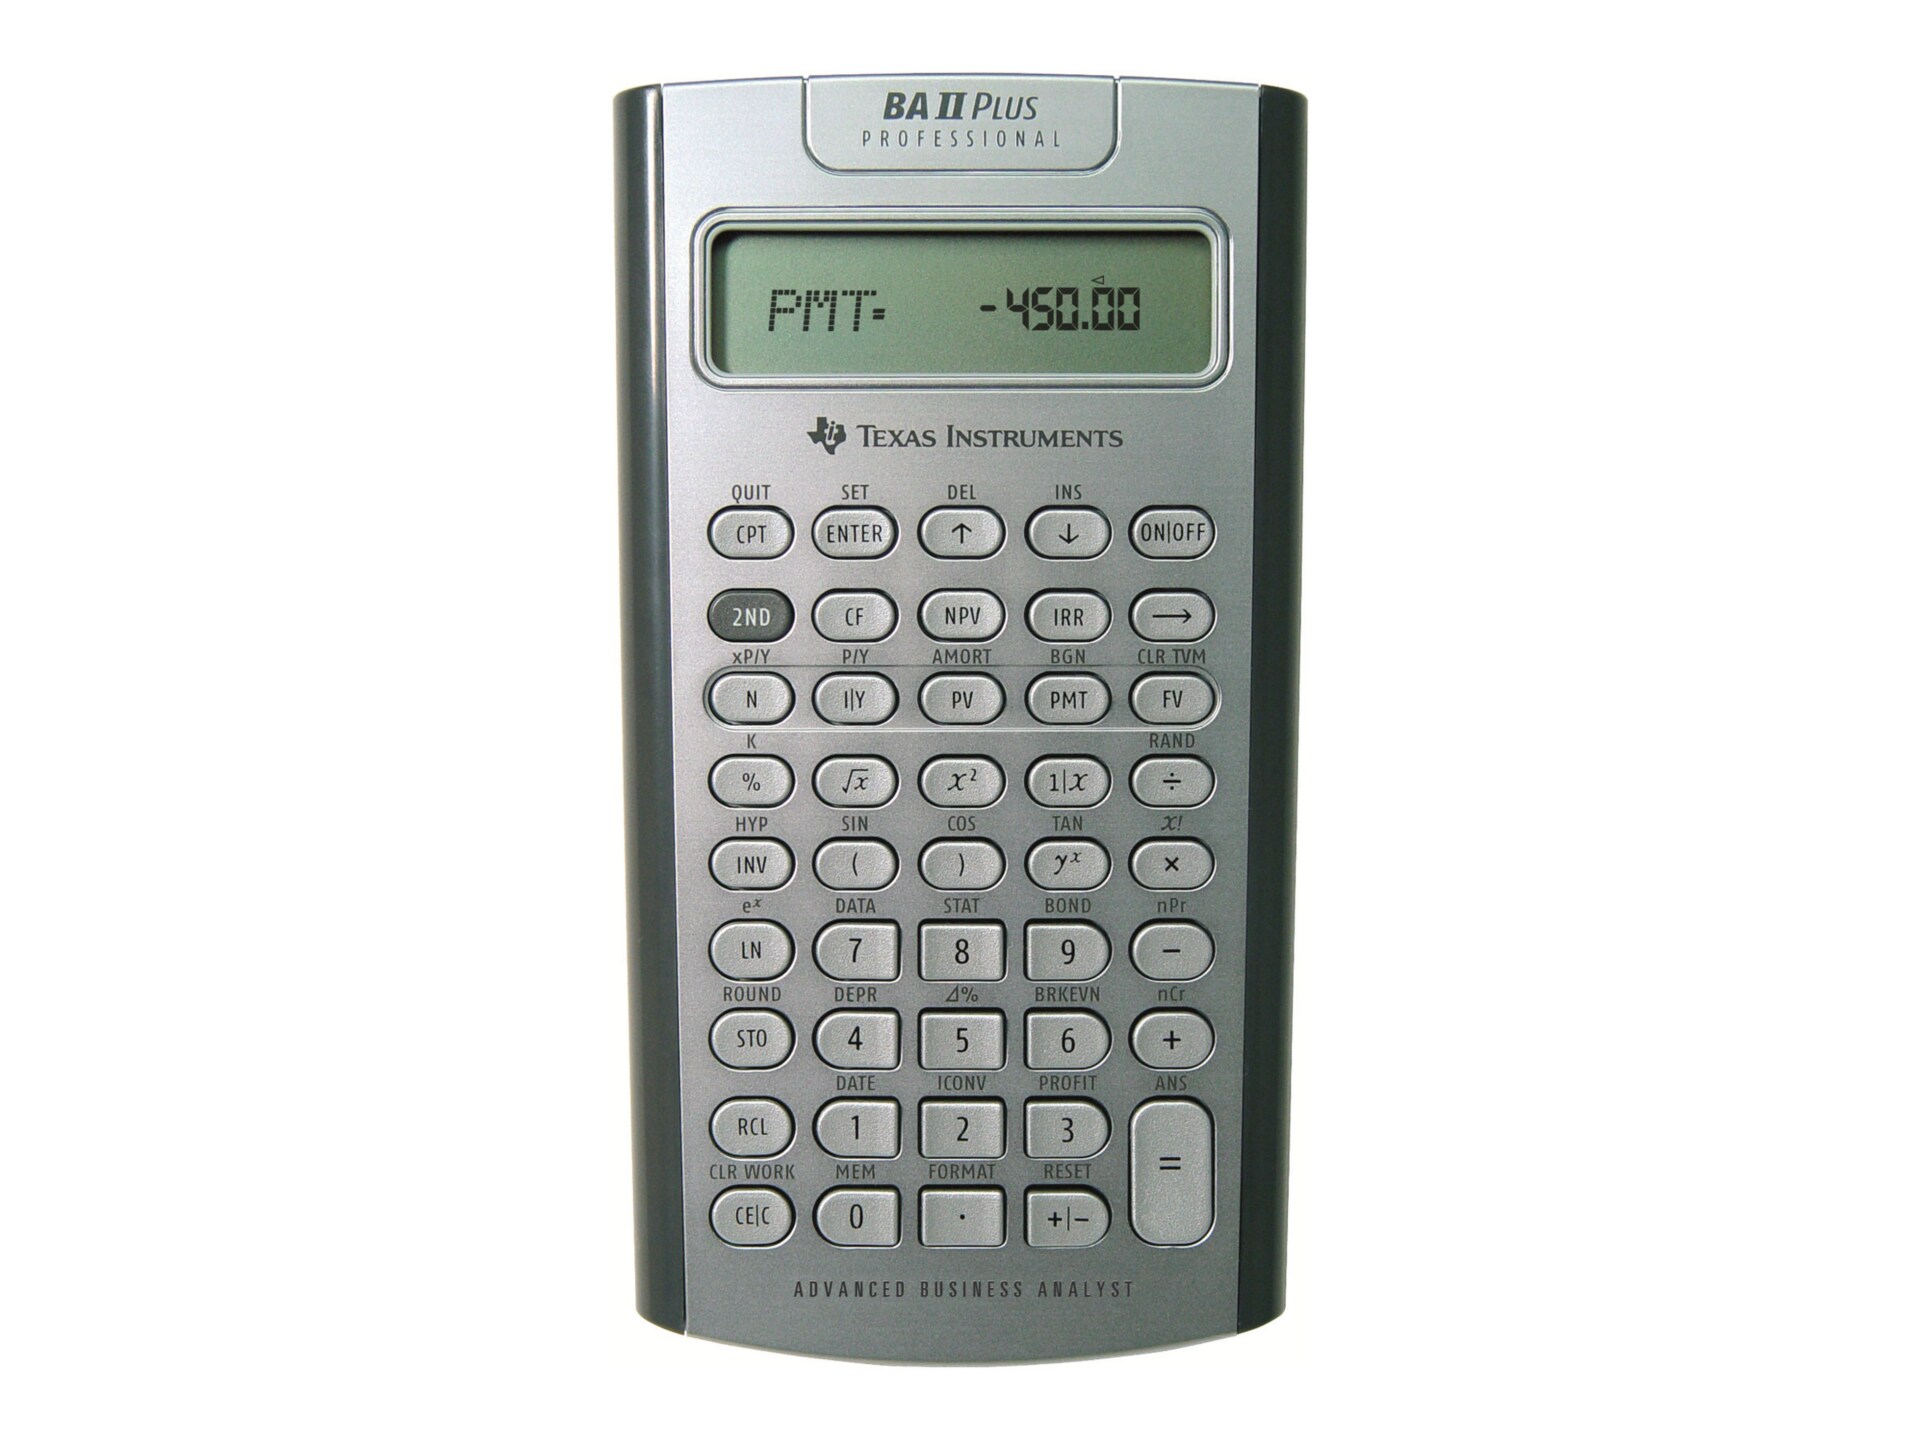 Texas Instruments BAII PLUS PROFESSIONAL - financial calculator